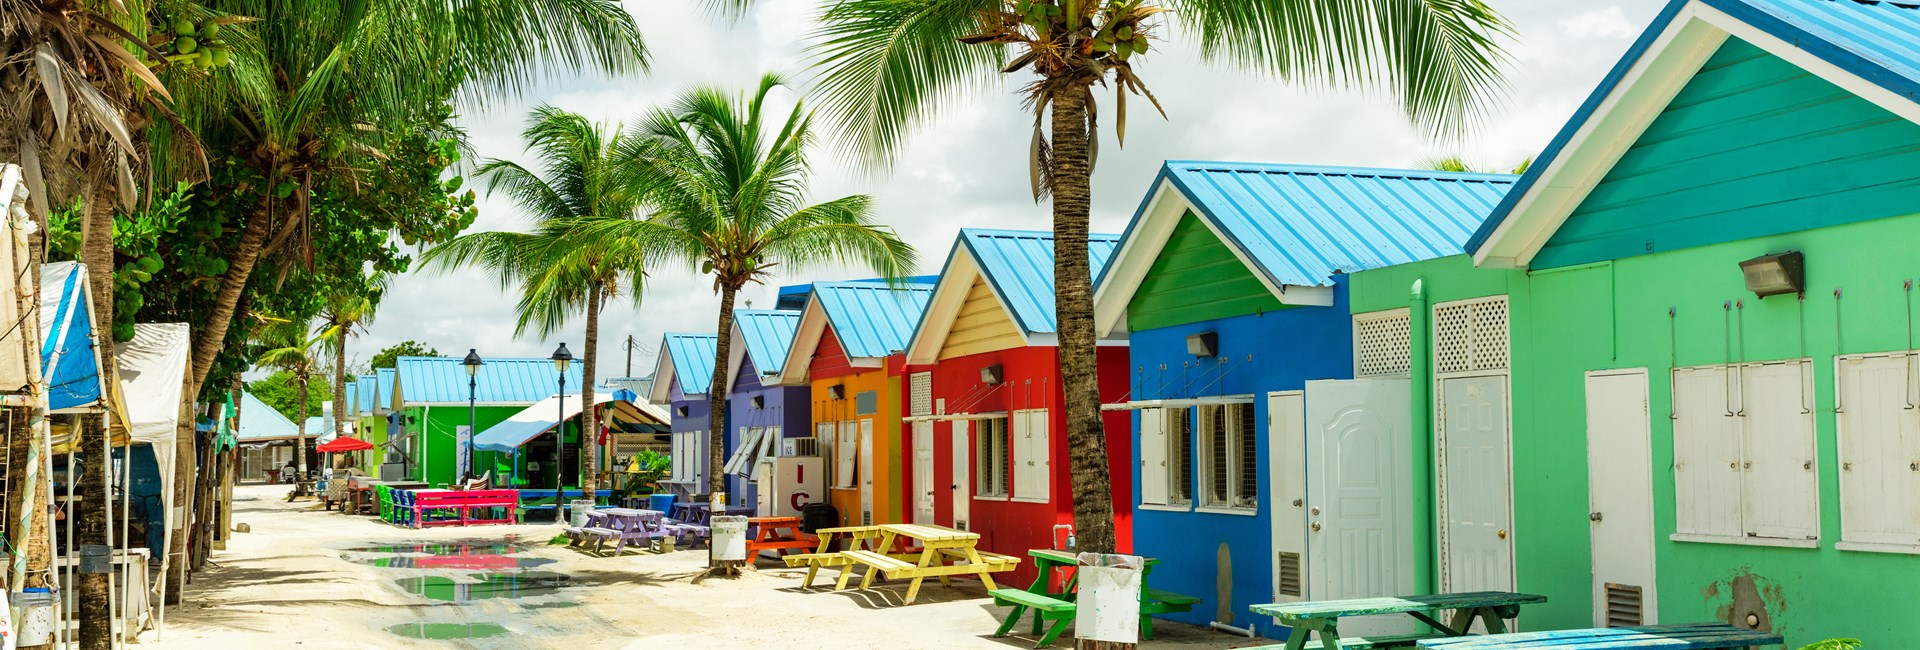 Colourful beach huts in Christ Church, Barbados